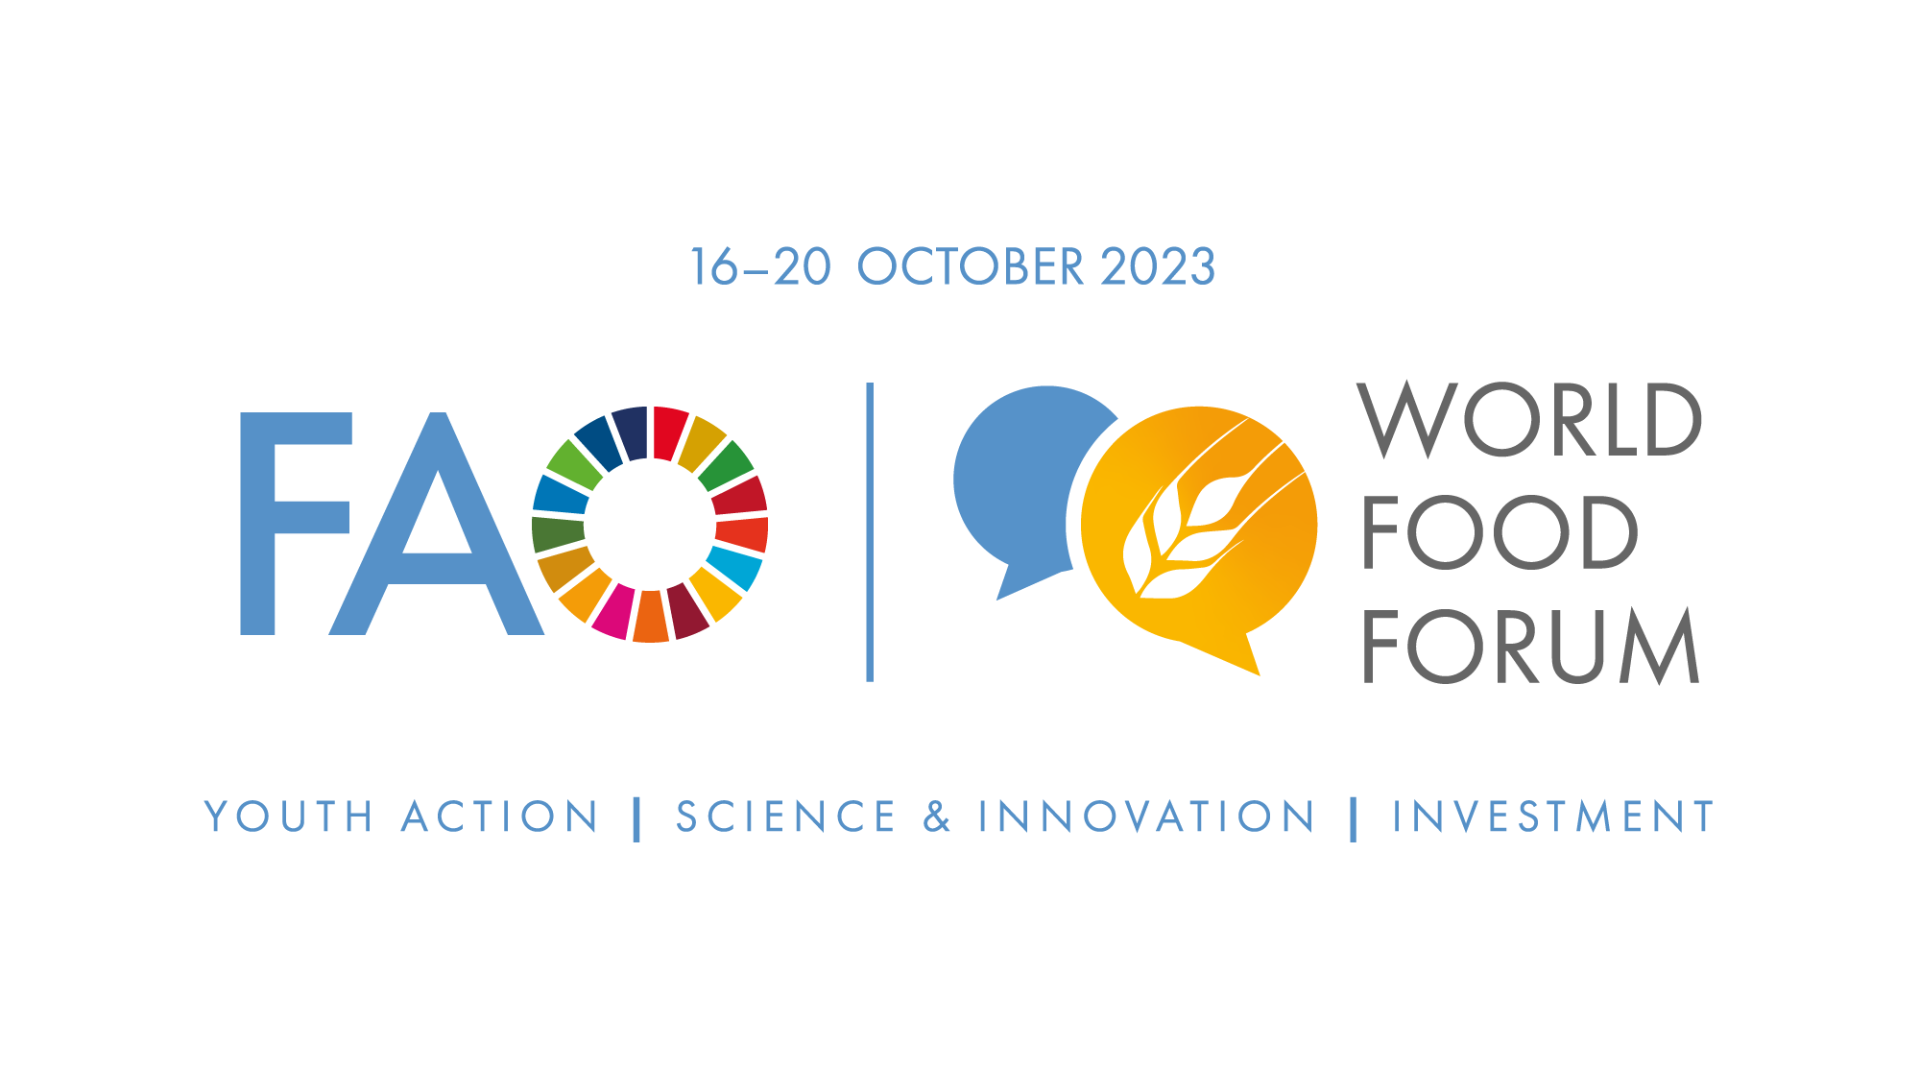 World Food Forum 2023 